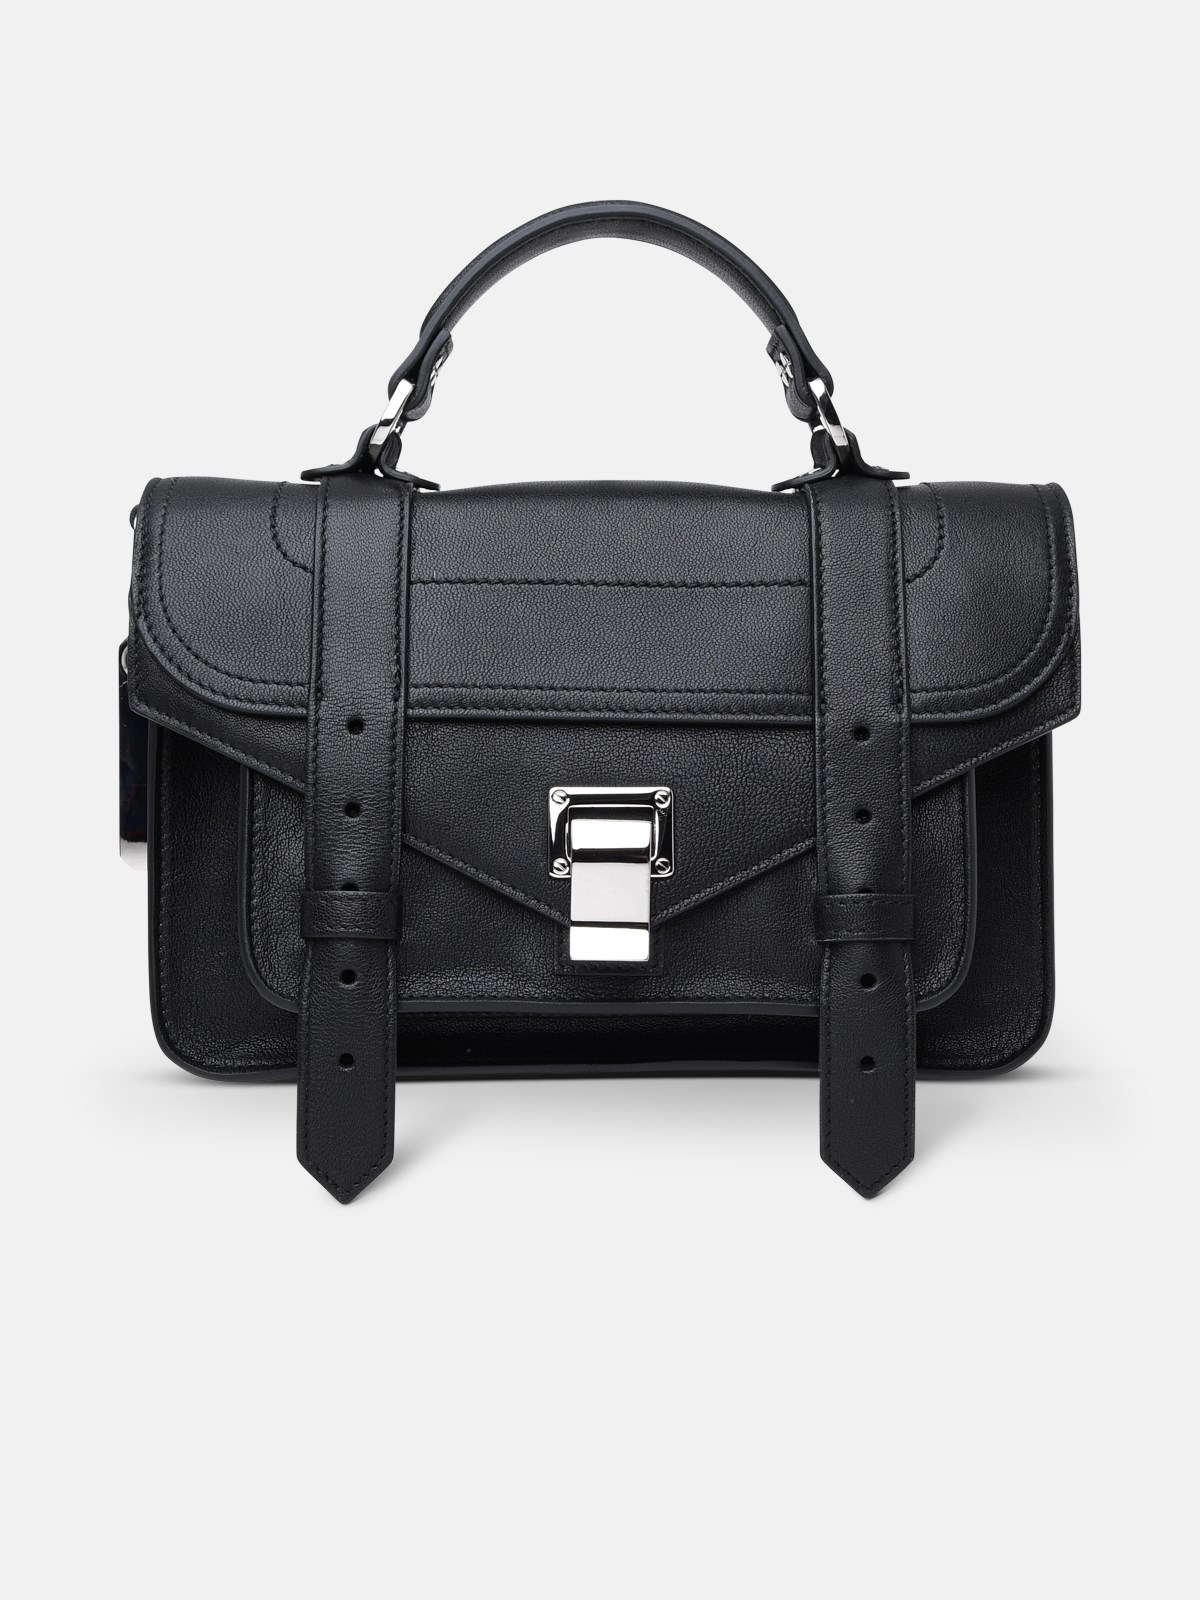 Proenza Schouler Black Leather Ps1 Tiny Bag